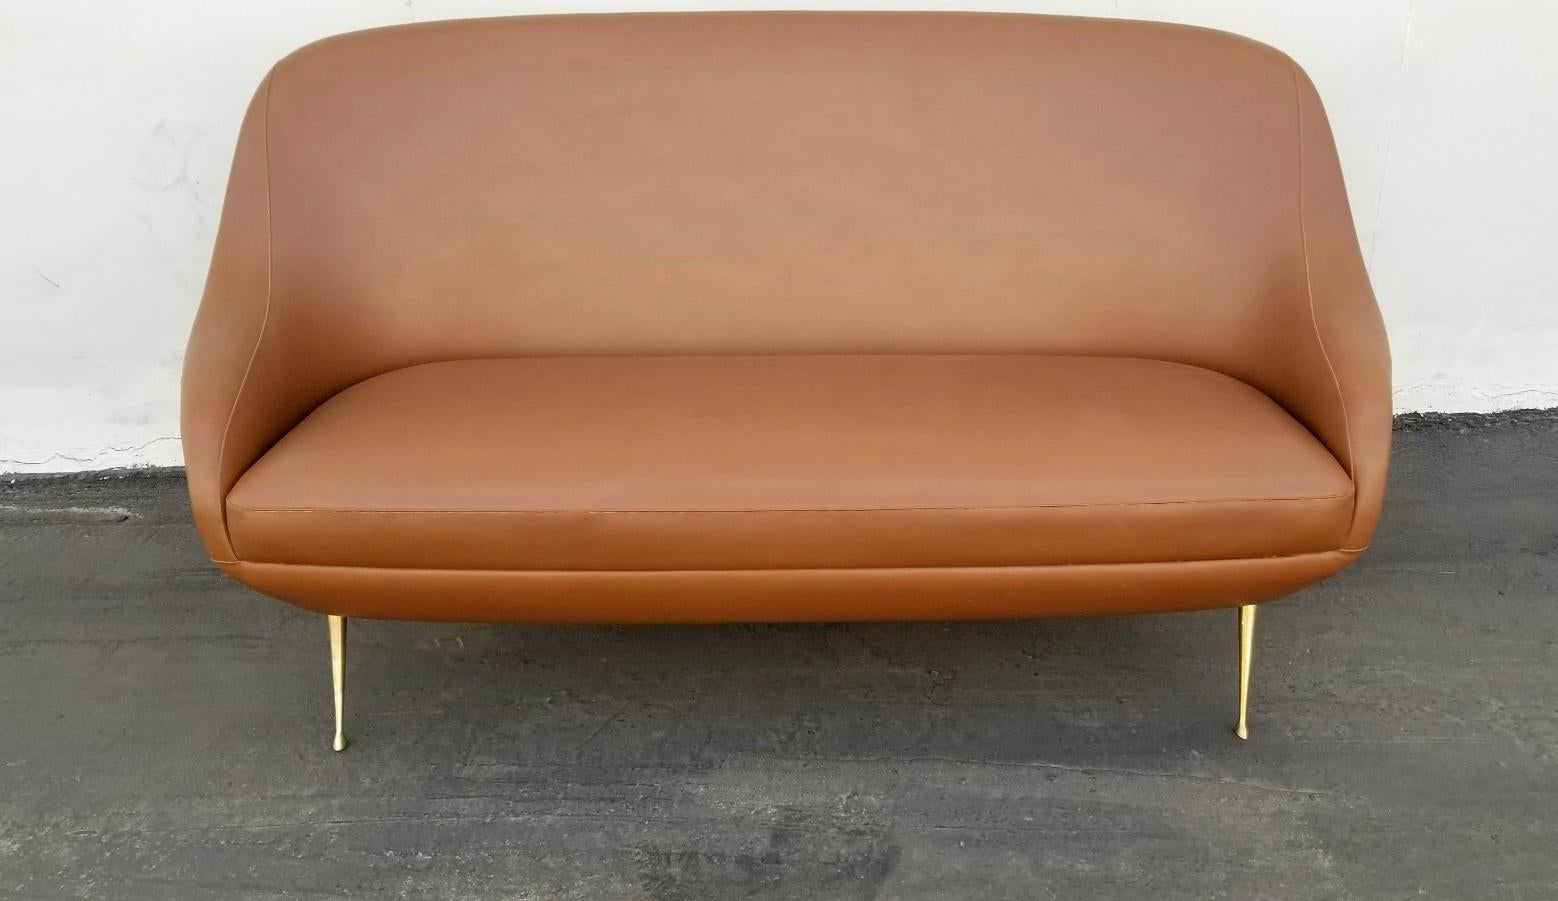 Italian  Isa Bergamo mid century settee original faux leather upholstery and original mid century condition. Brass legs. 